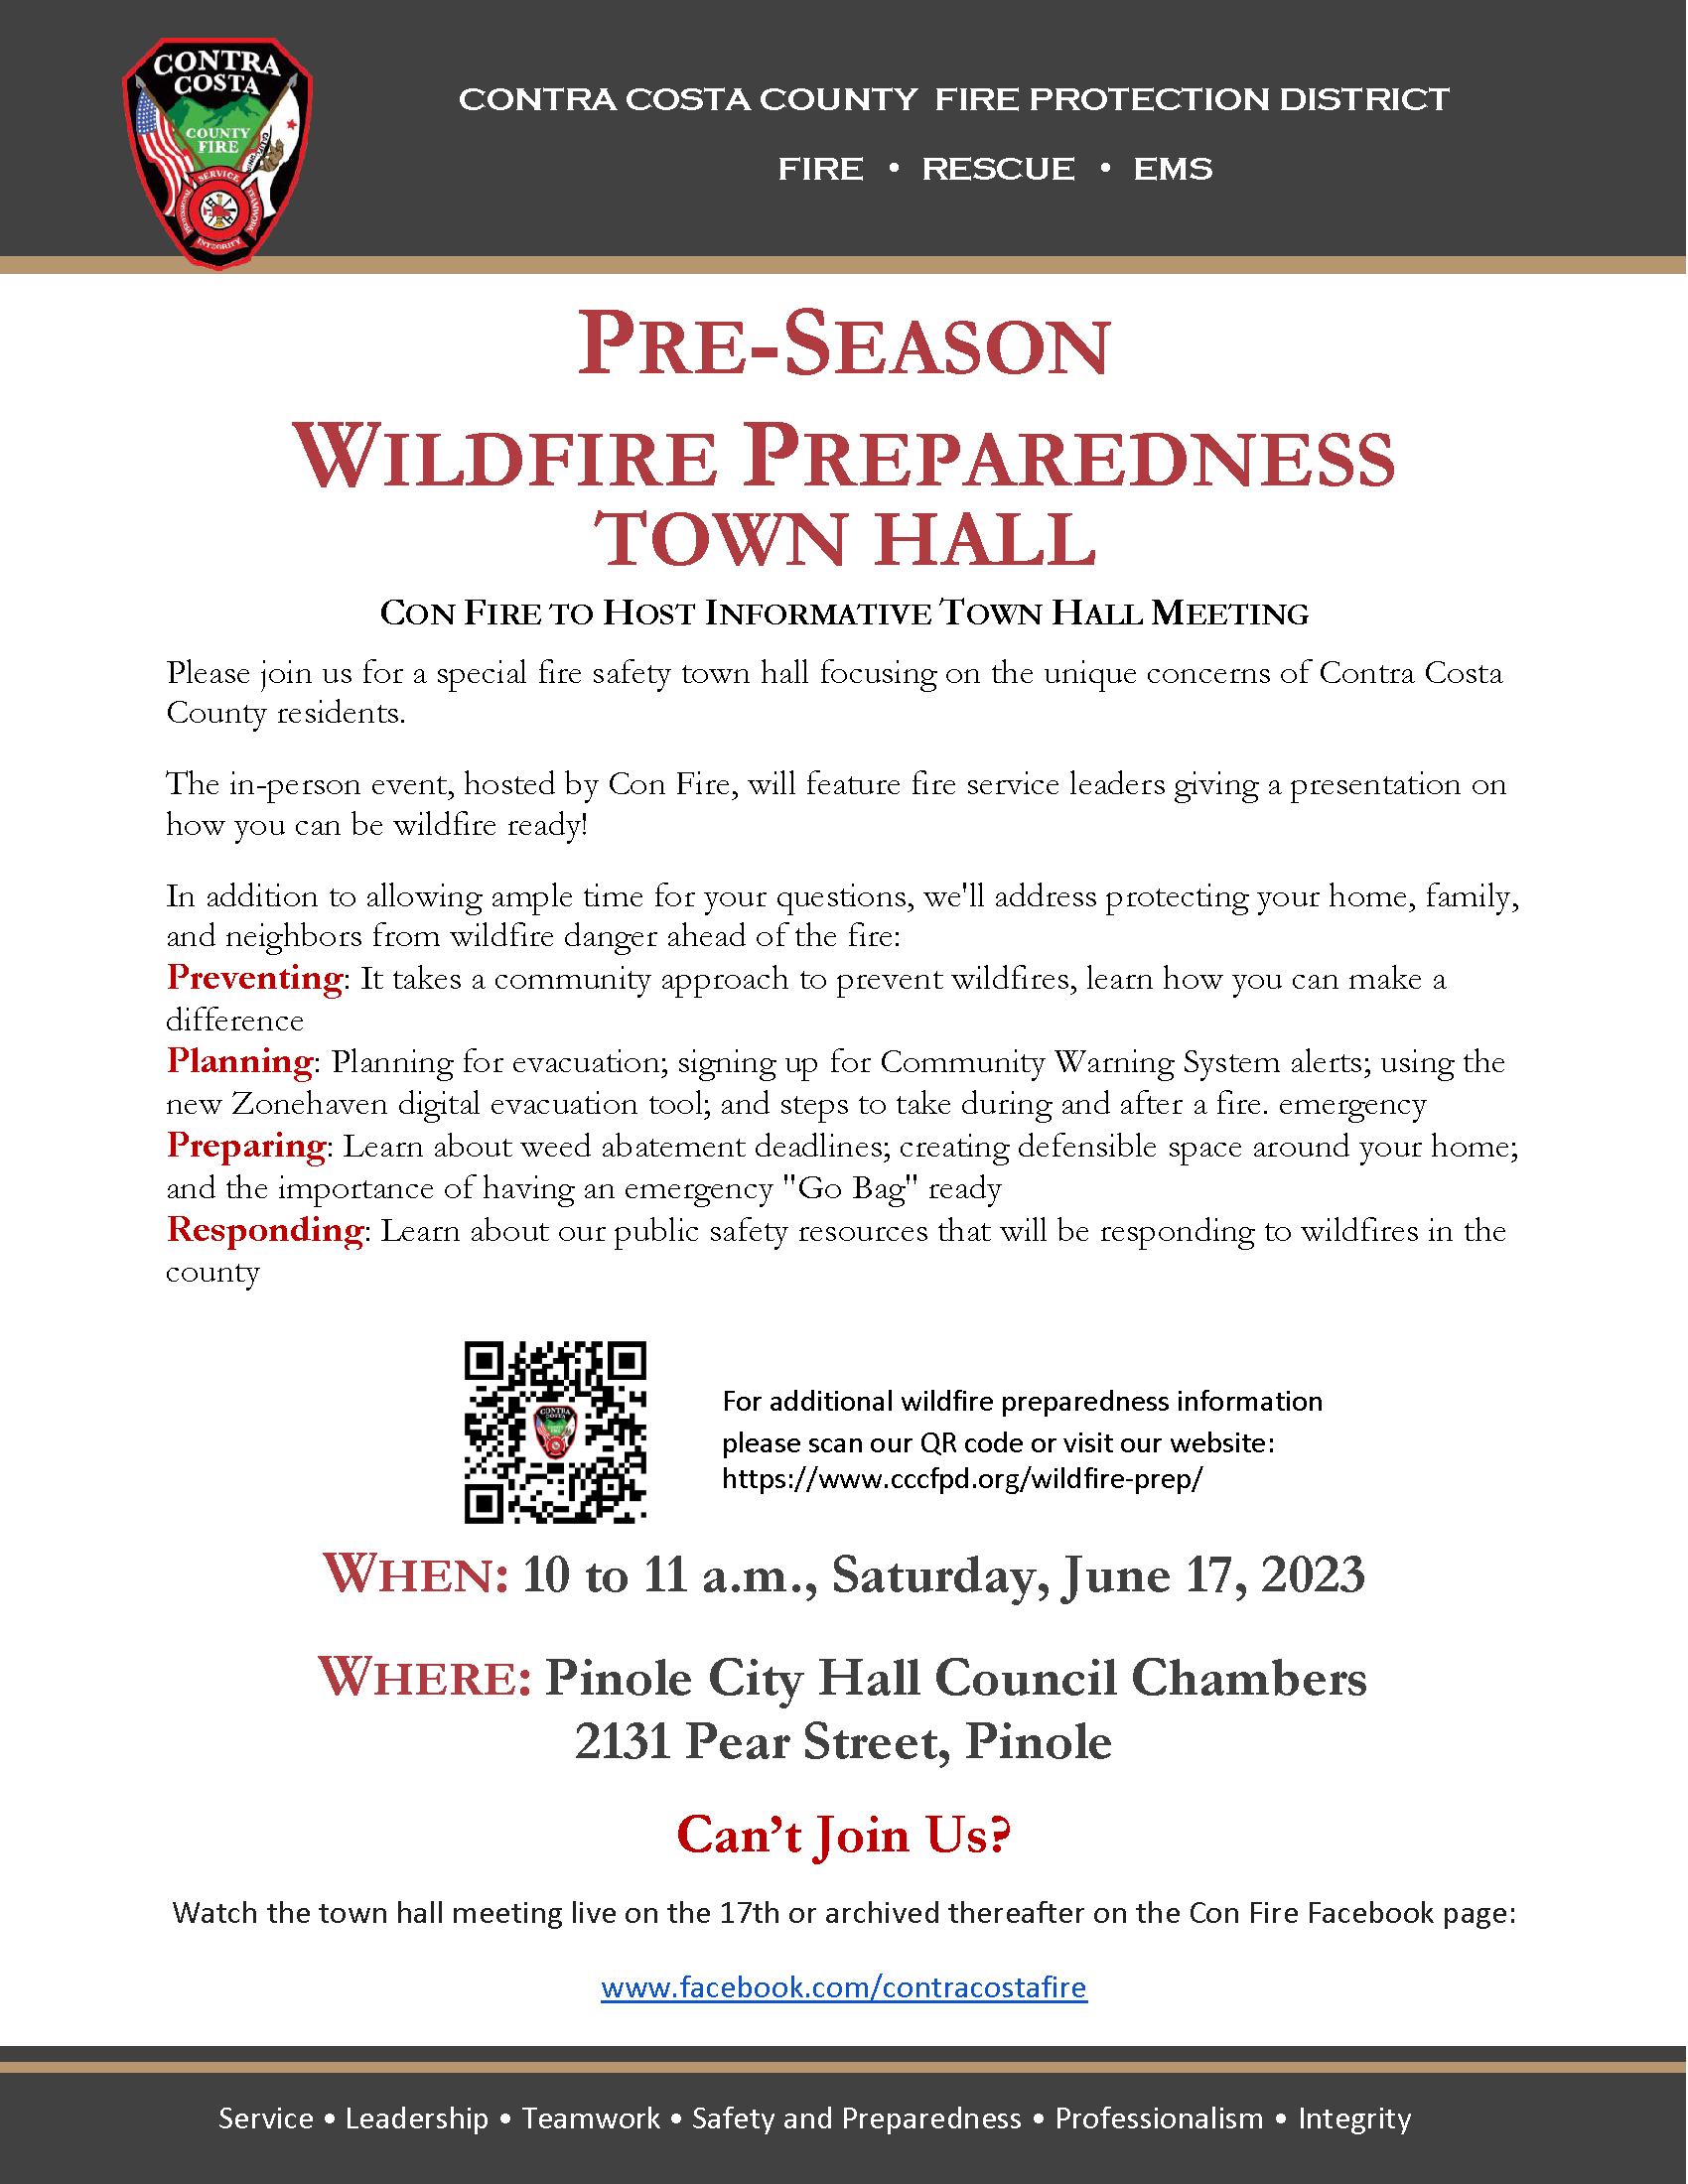 6-17-23 -- Con Fire Wildland Fire Prep Town Hall -- Pinole